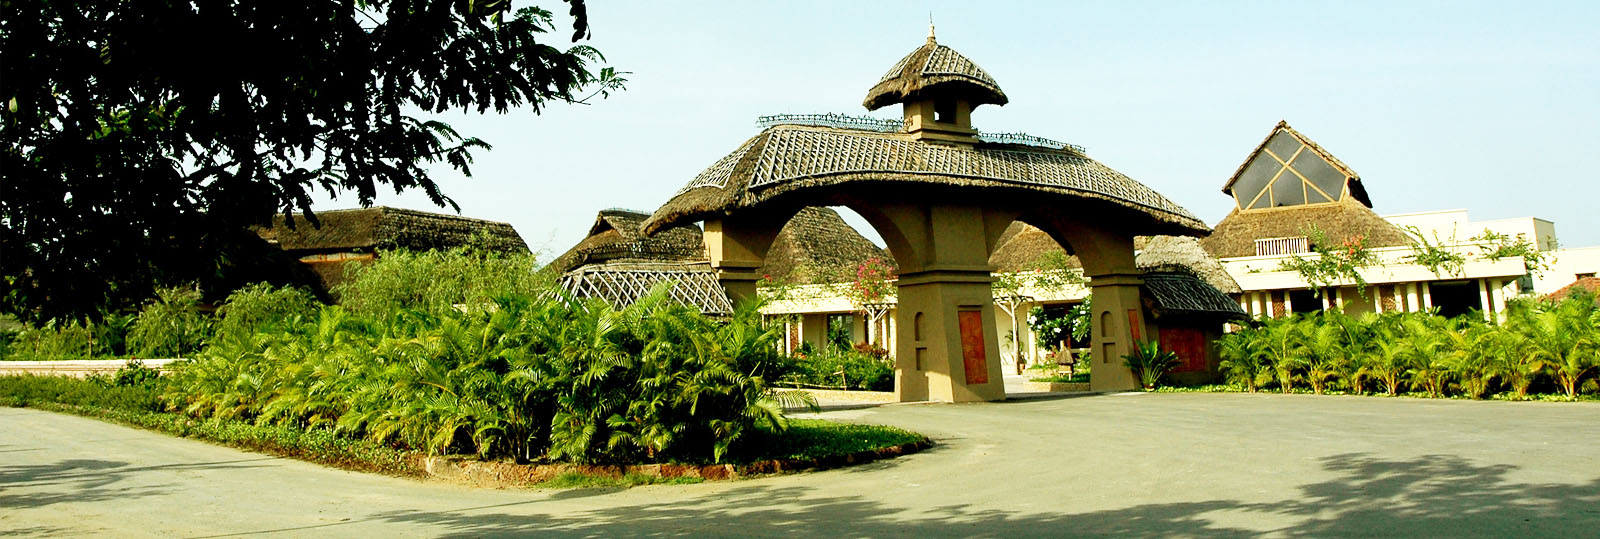 resorts near kolkata - The Vedic Village Resort